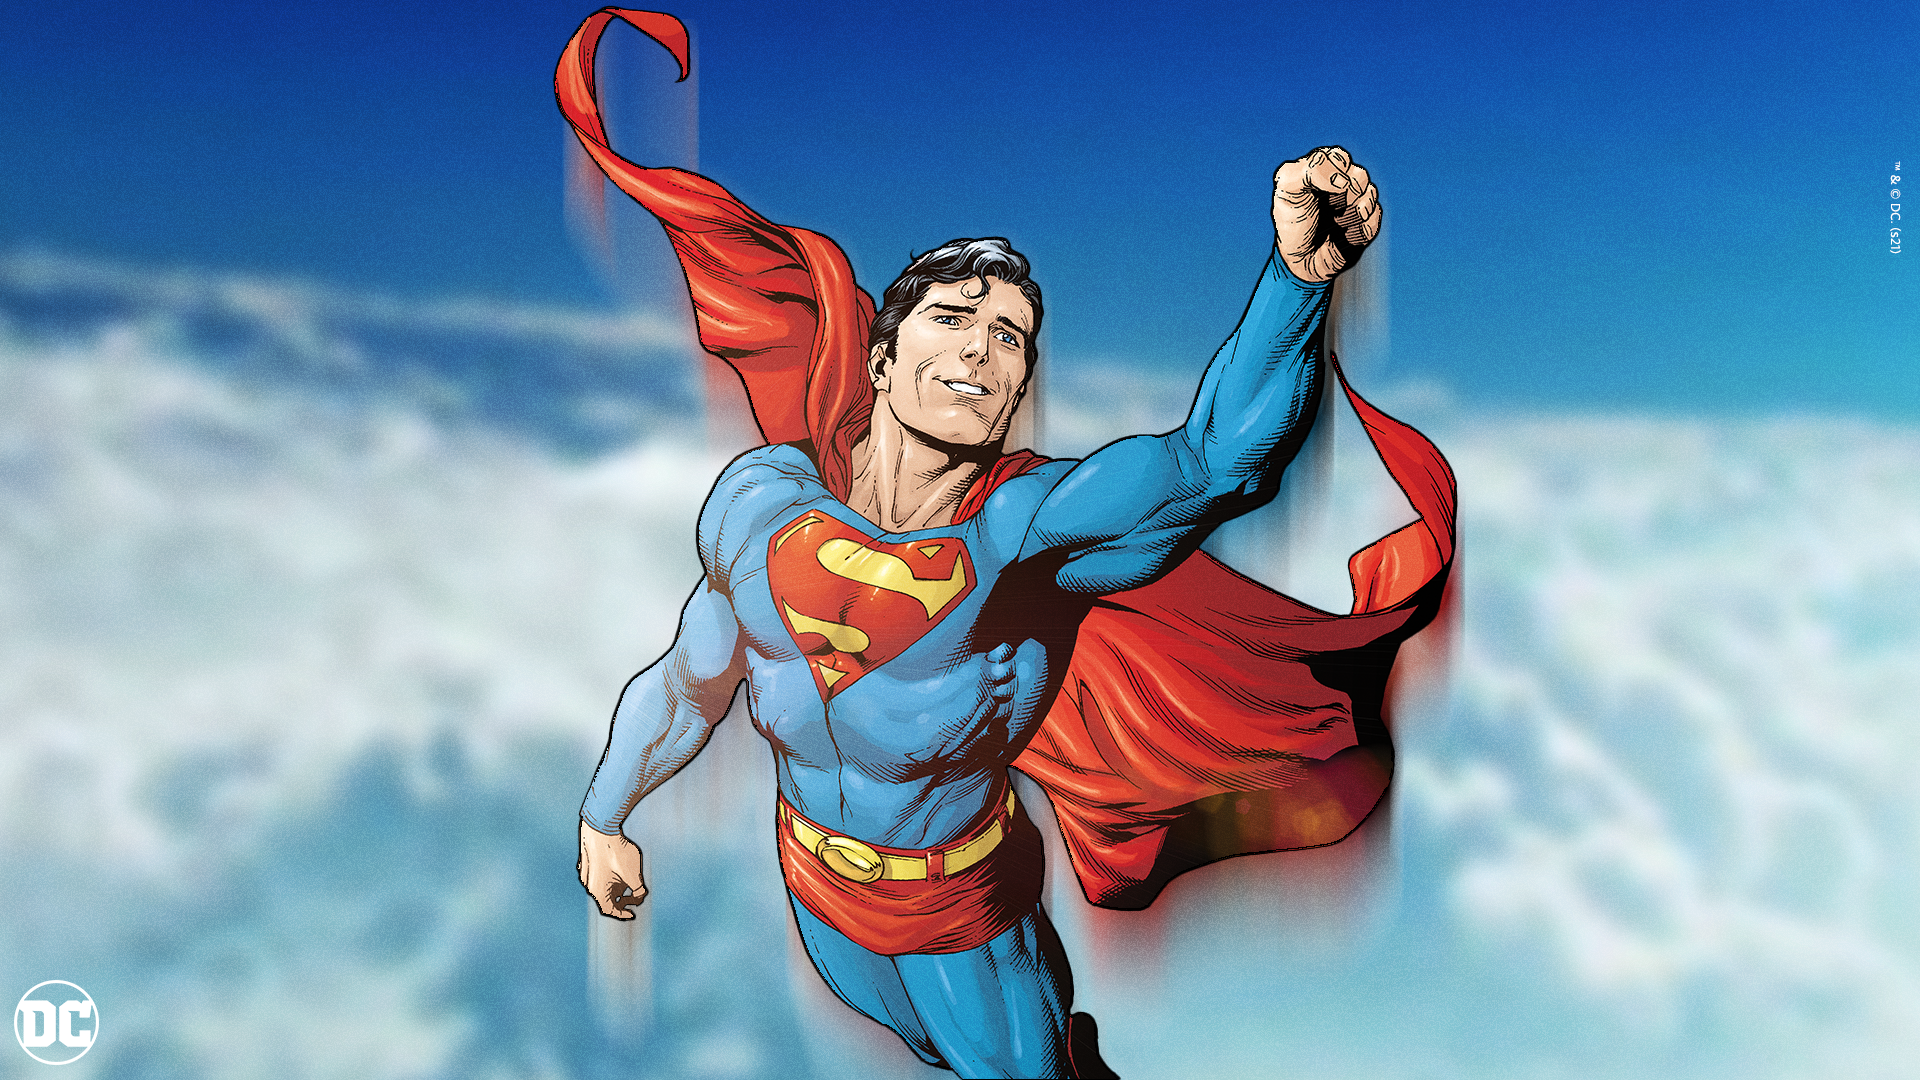 DCComics_Superman&Lois101_22_v1.png